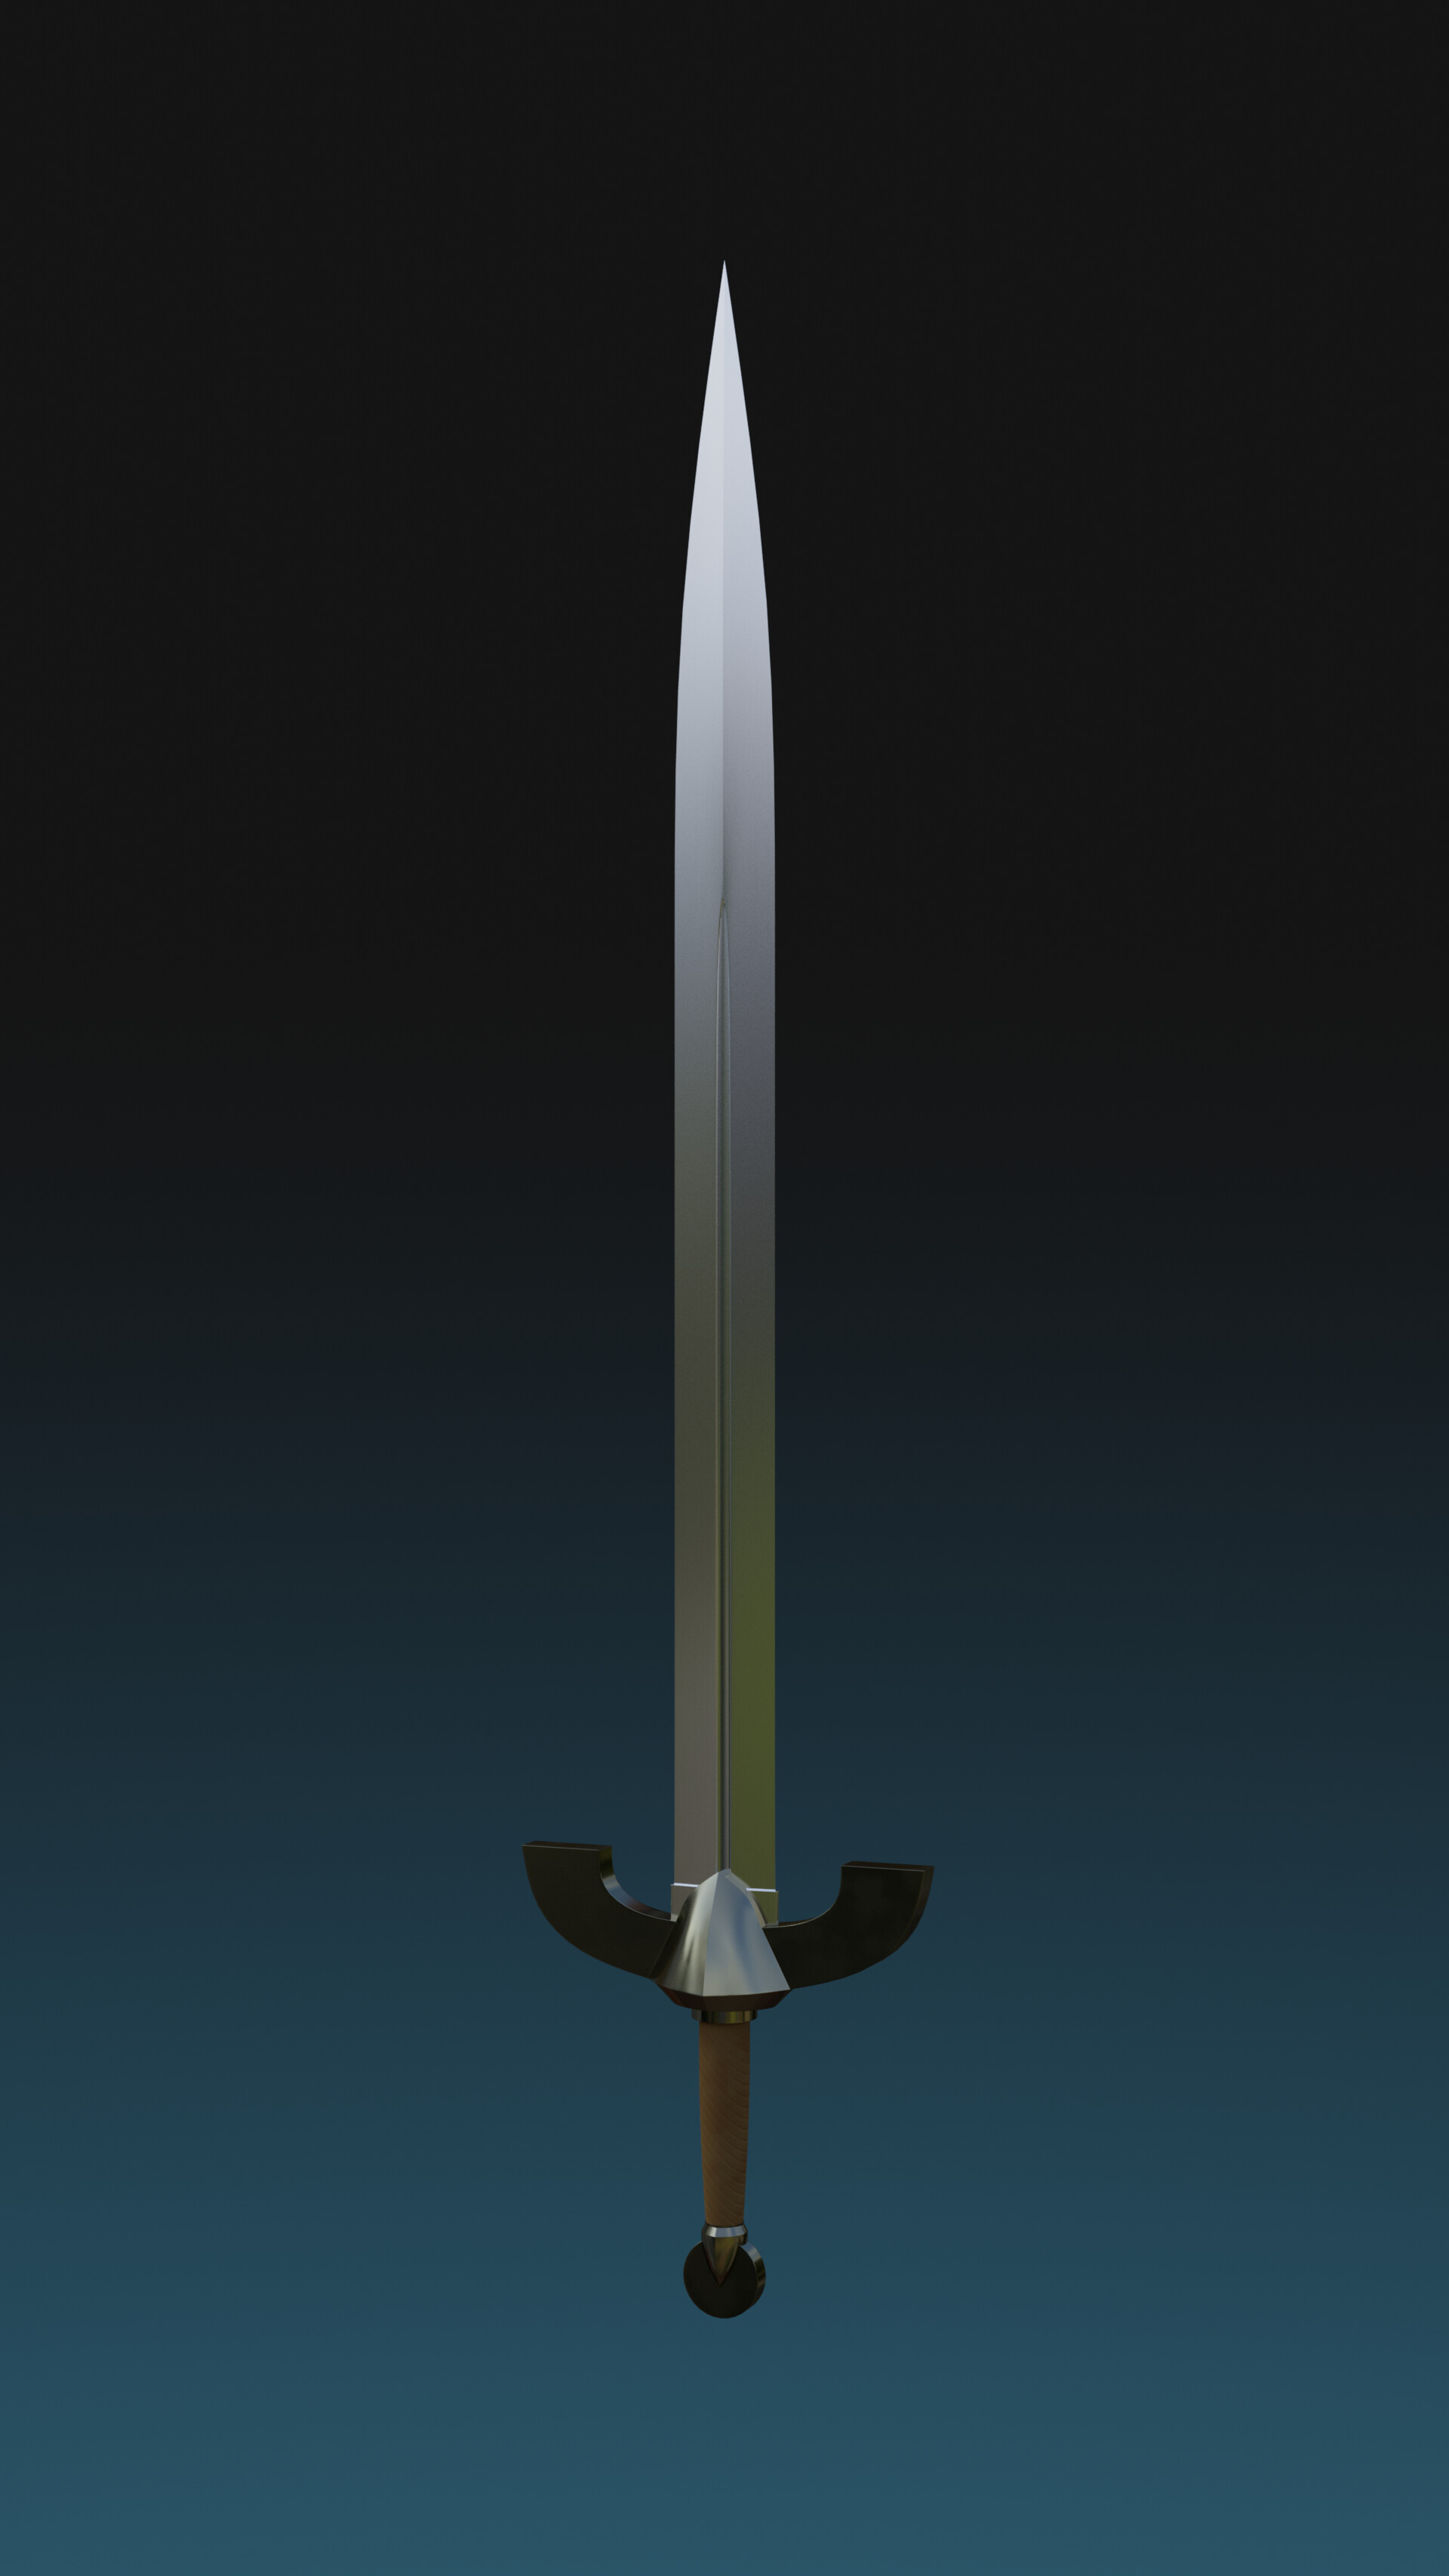 minecraft iron sword